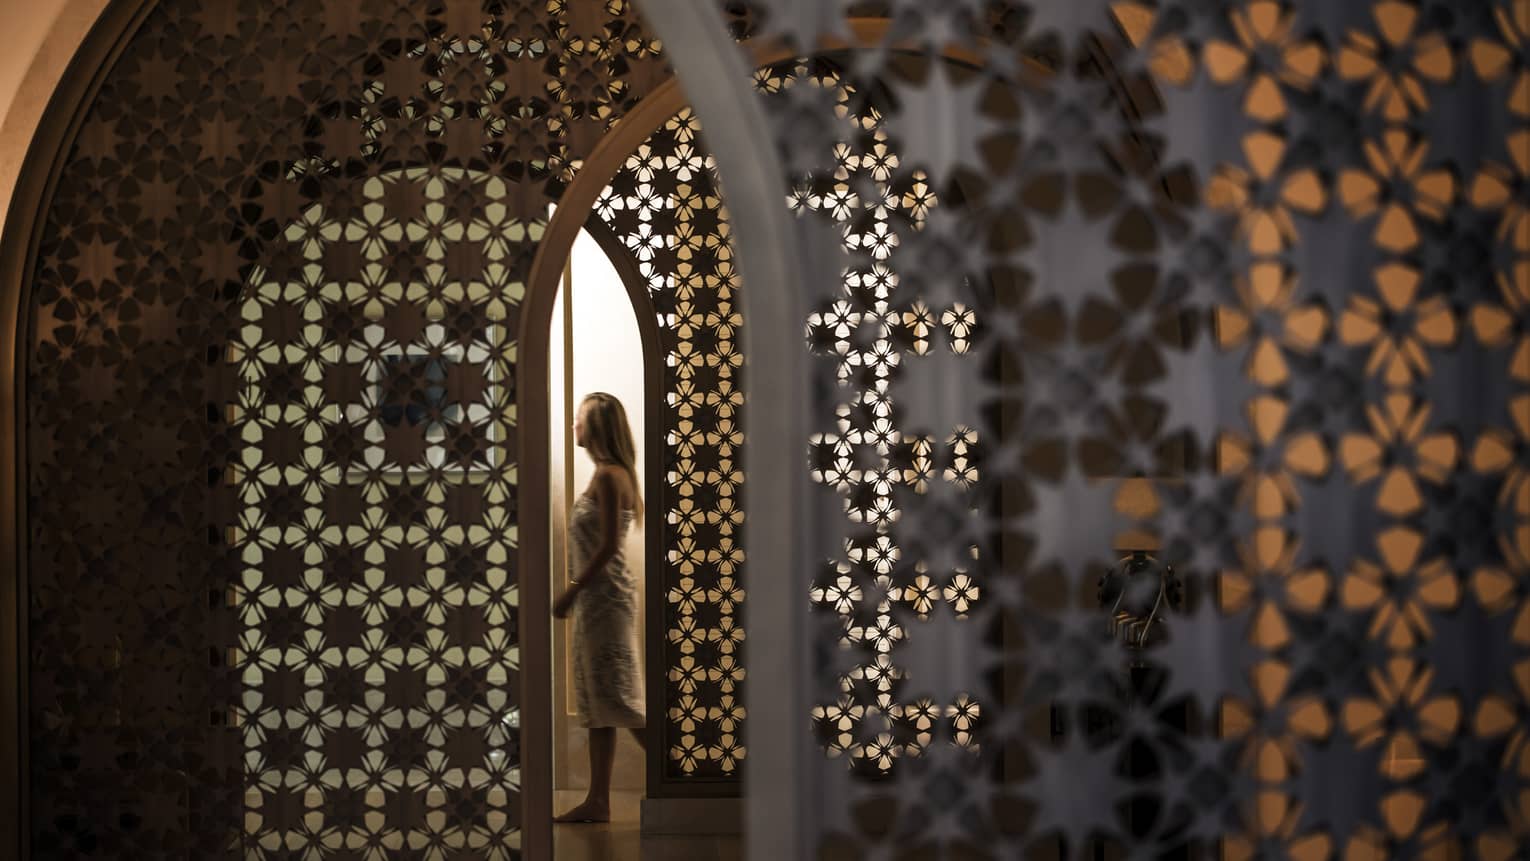 Woman in white wrap walks through dimly-lit decorative entranceway in hall